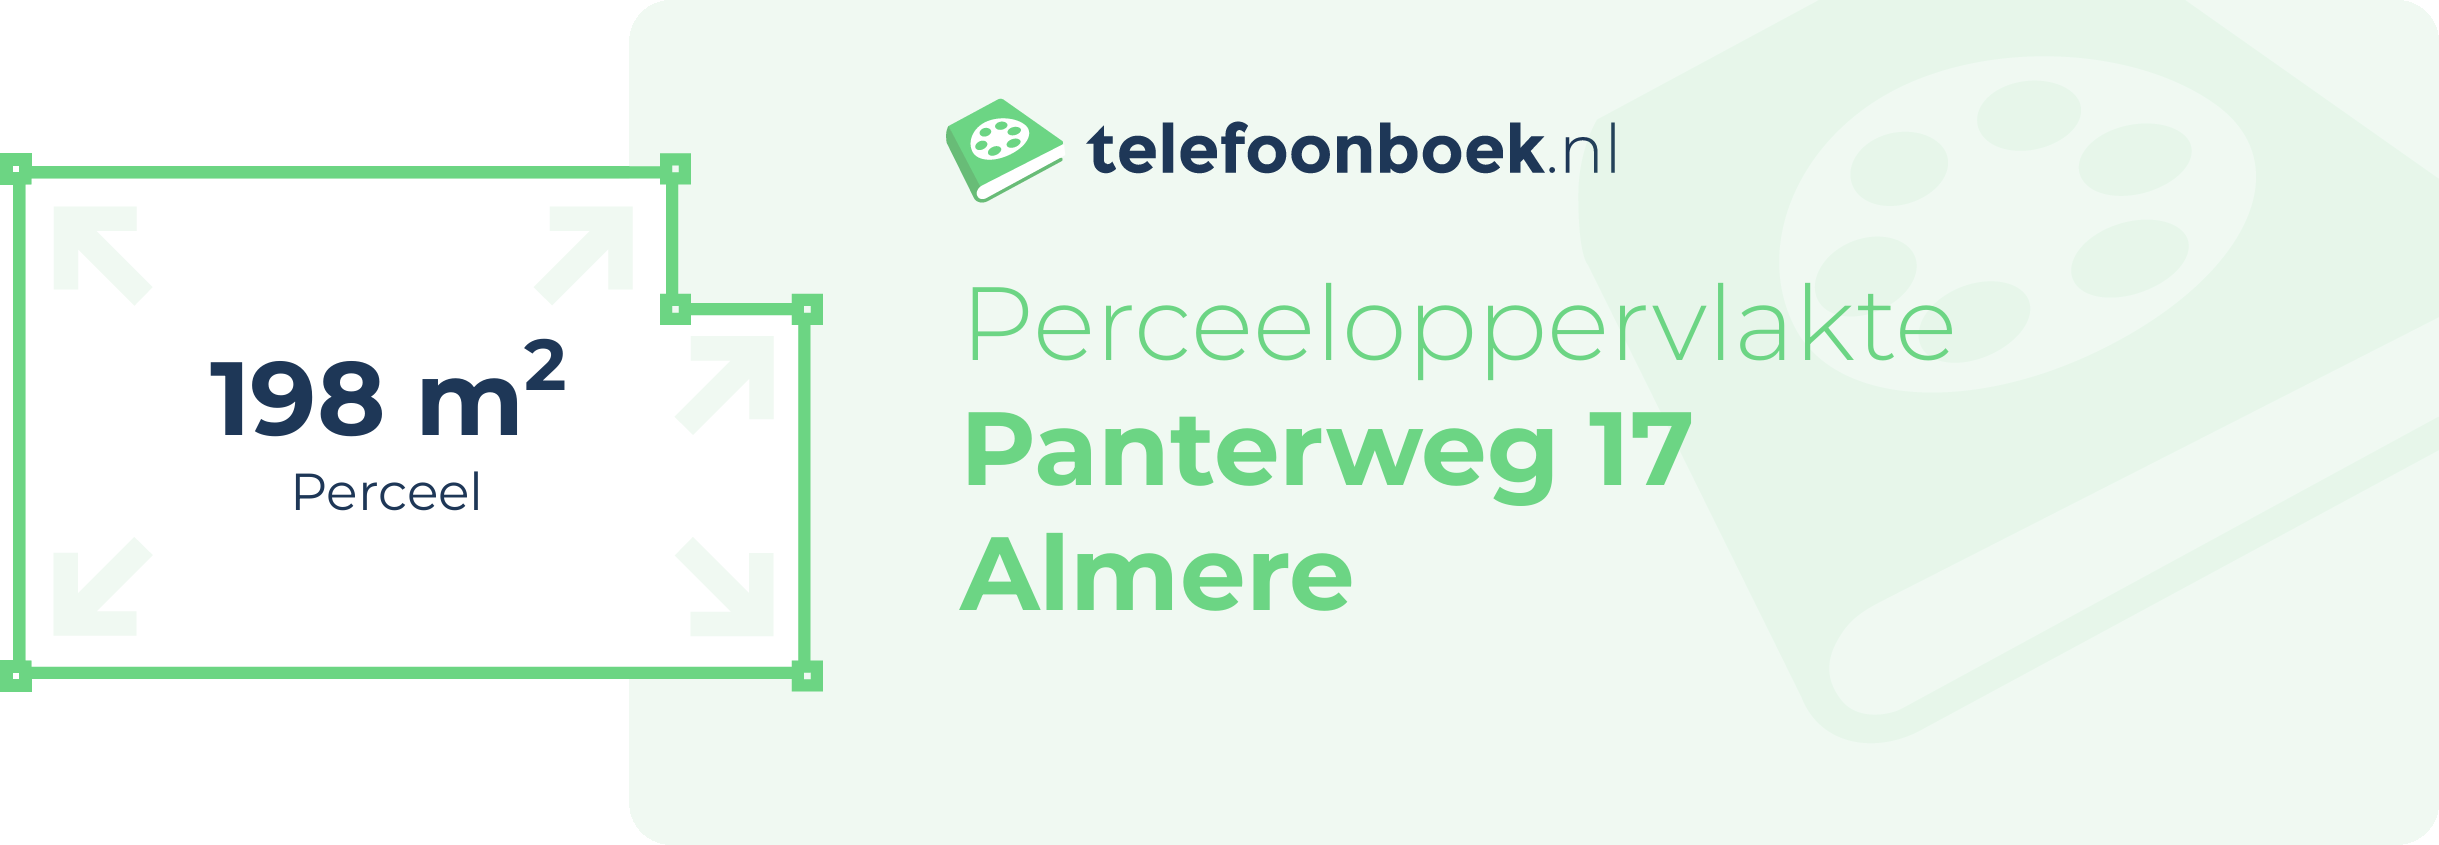 Perceeloppervlakte Panterweg 17 Almere